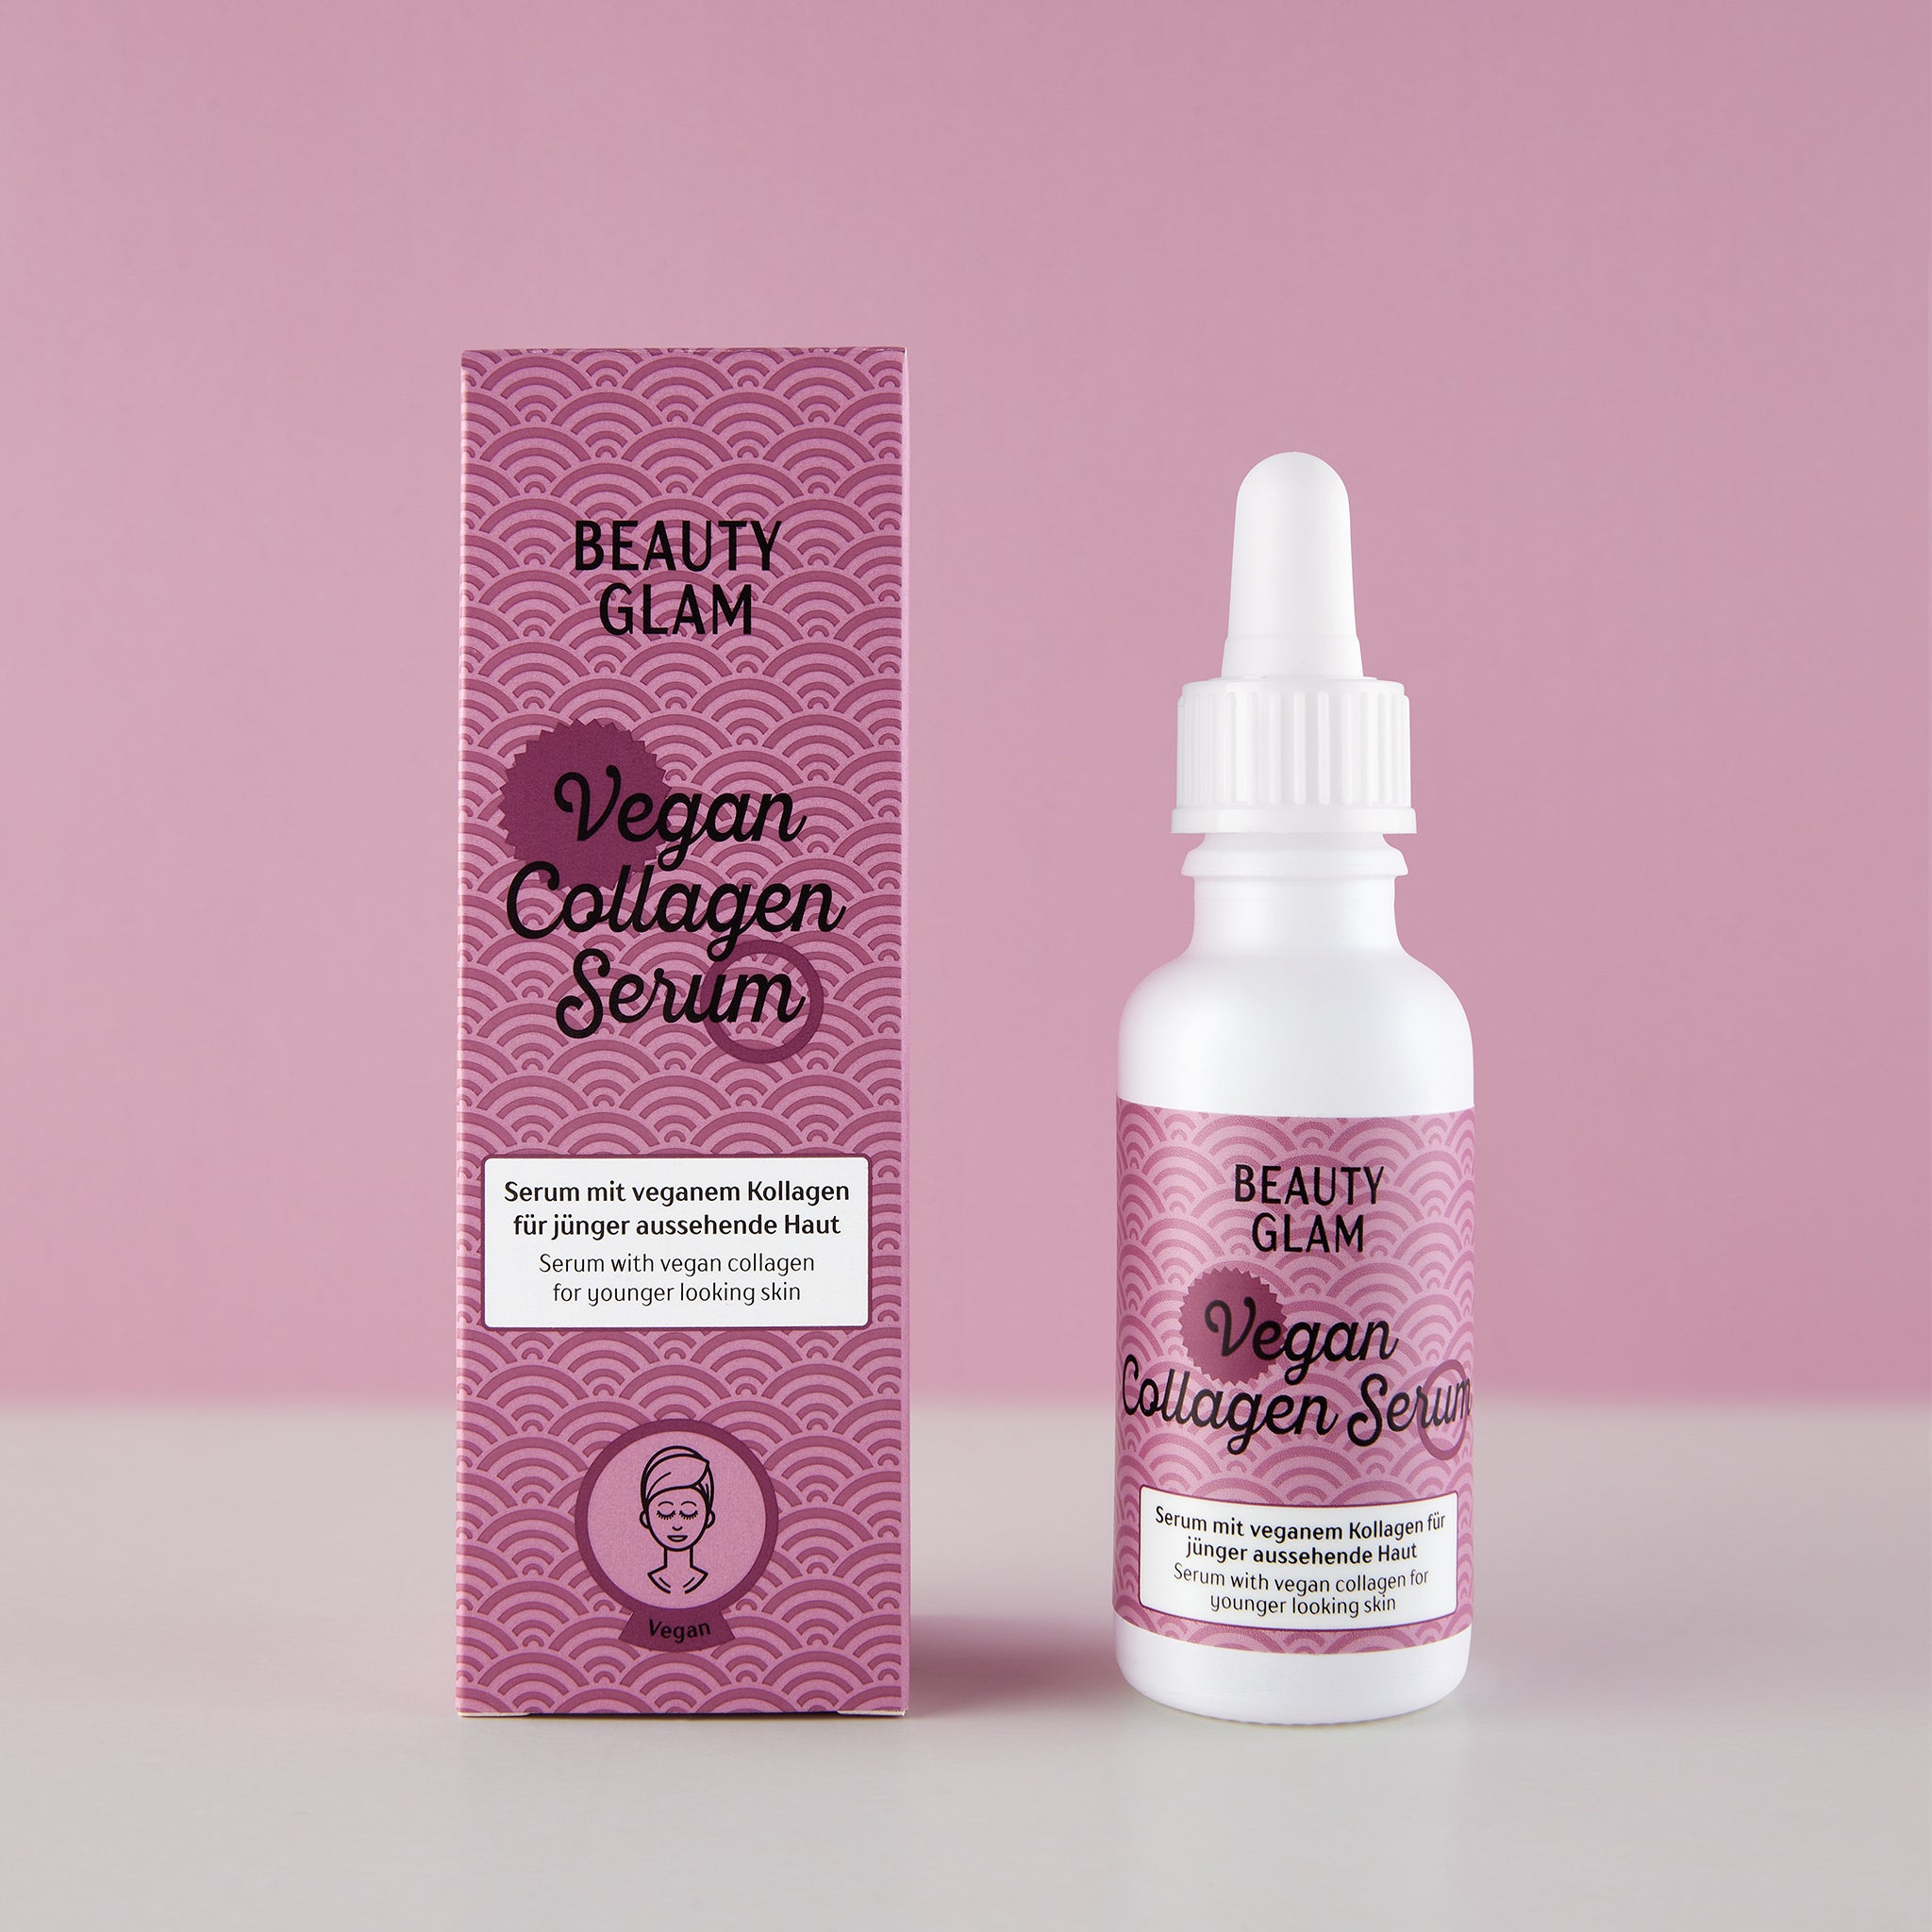 Beauty Glam Vegan Collagen Serum